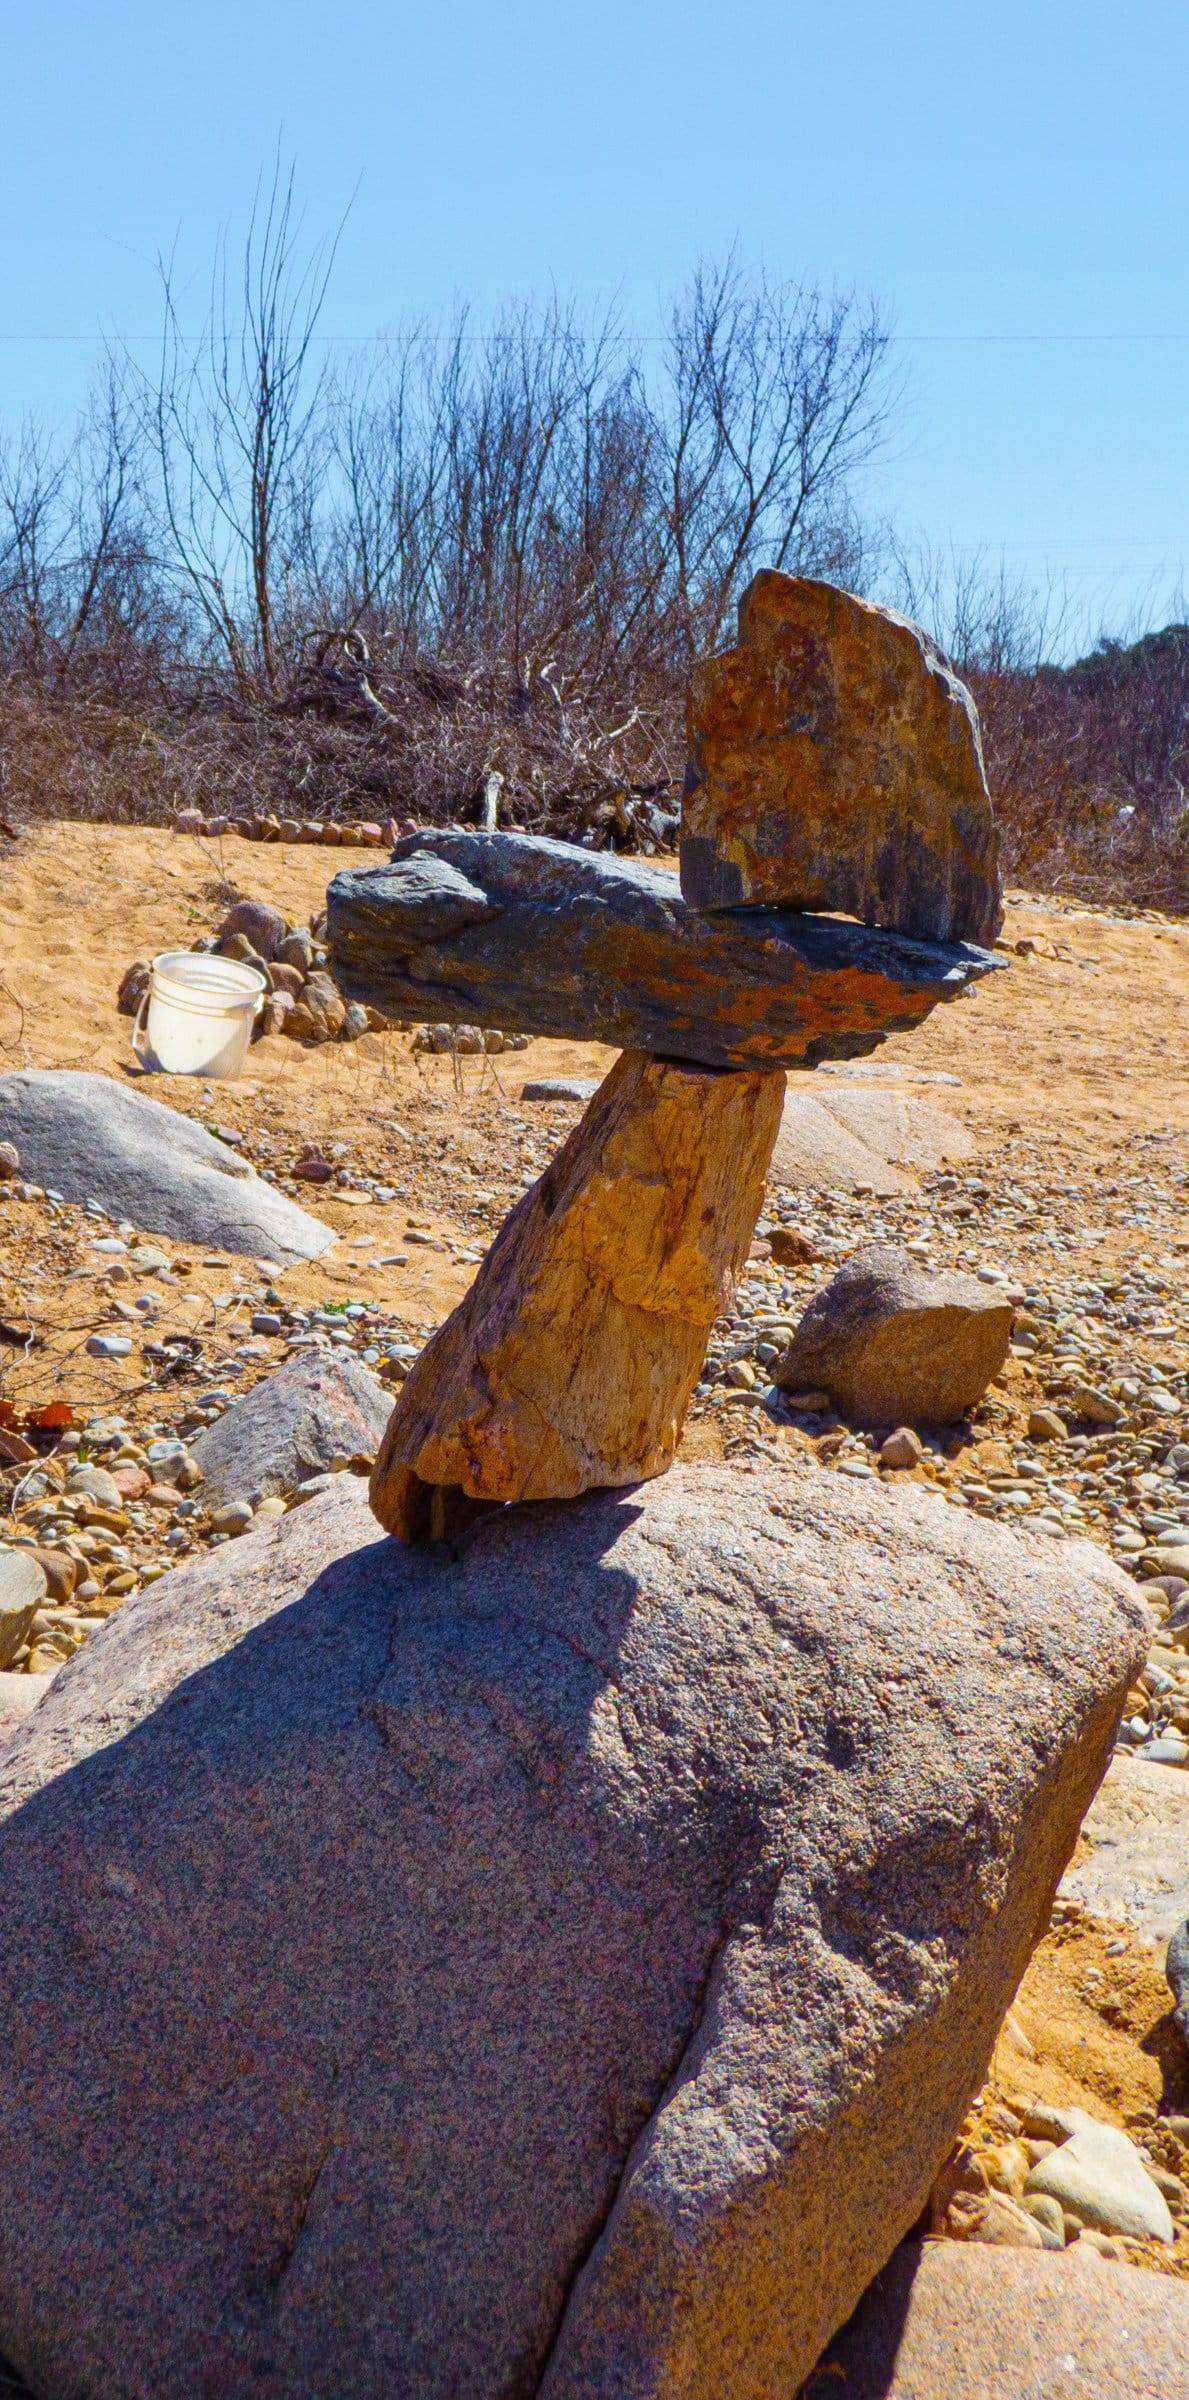 Stacking Rocks at the Llano Earth Art Festival